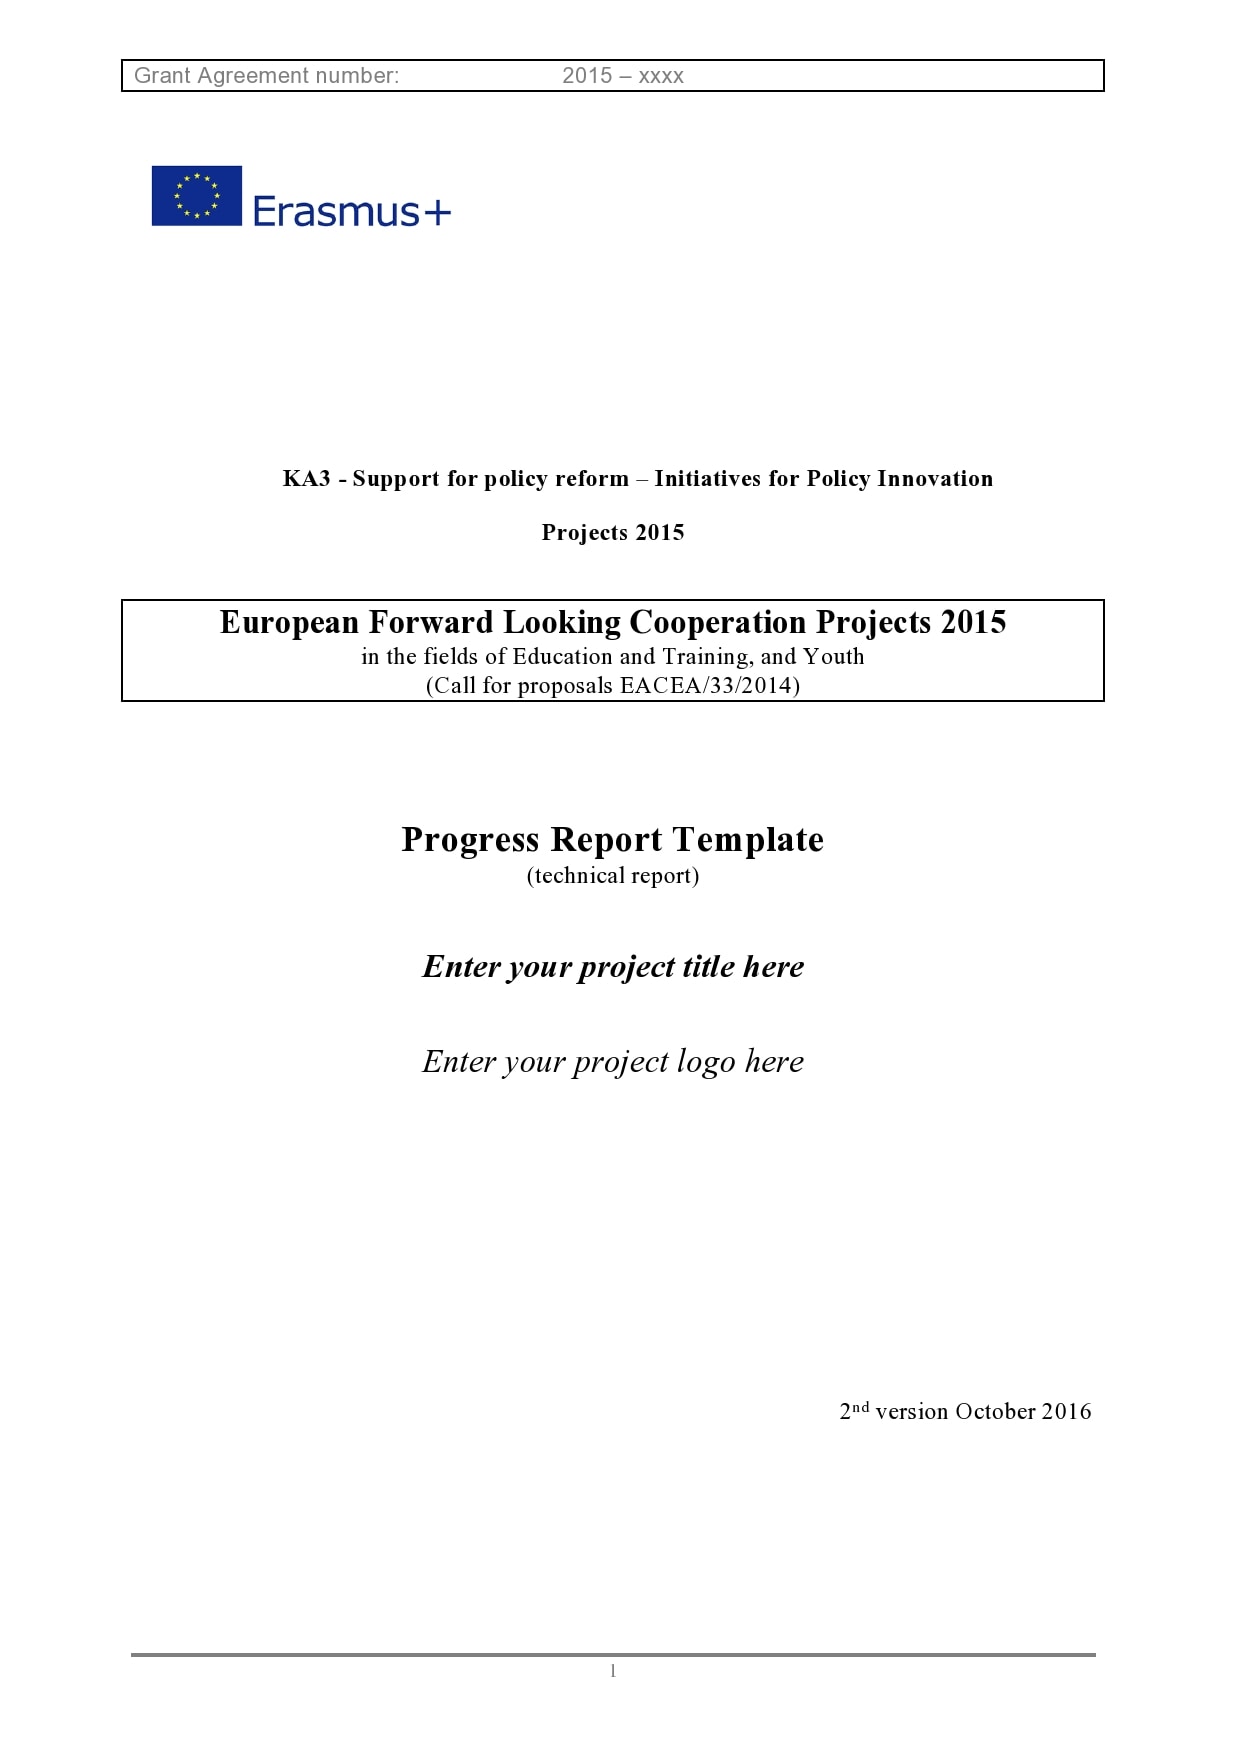 21 Professional Progress Report Templates (Free) - TemplateArchive Inside Engineering Progress Report Template